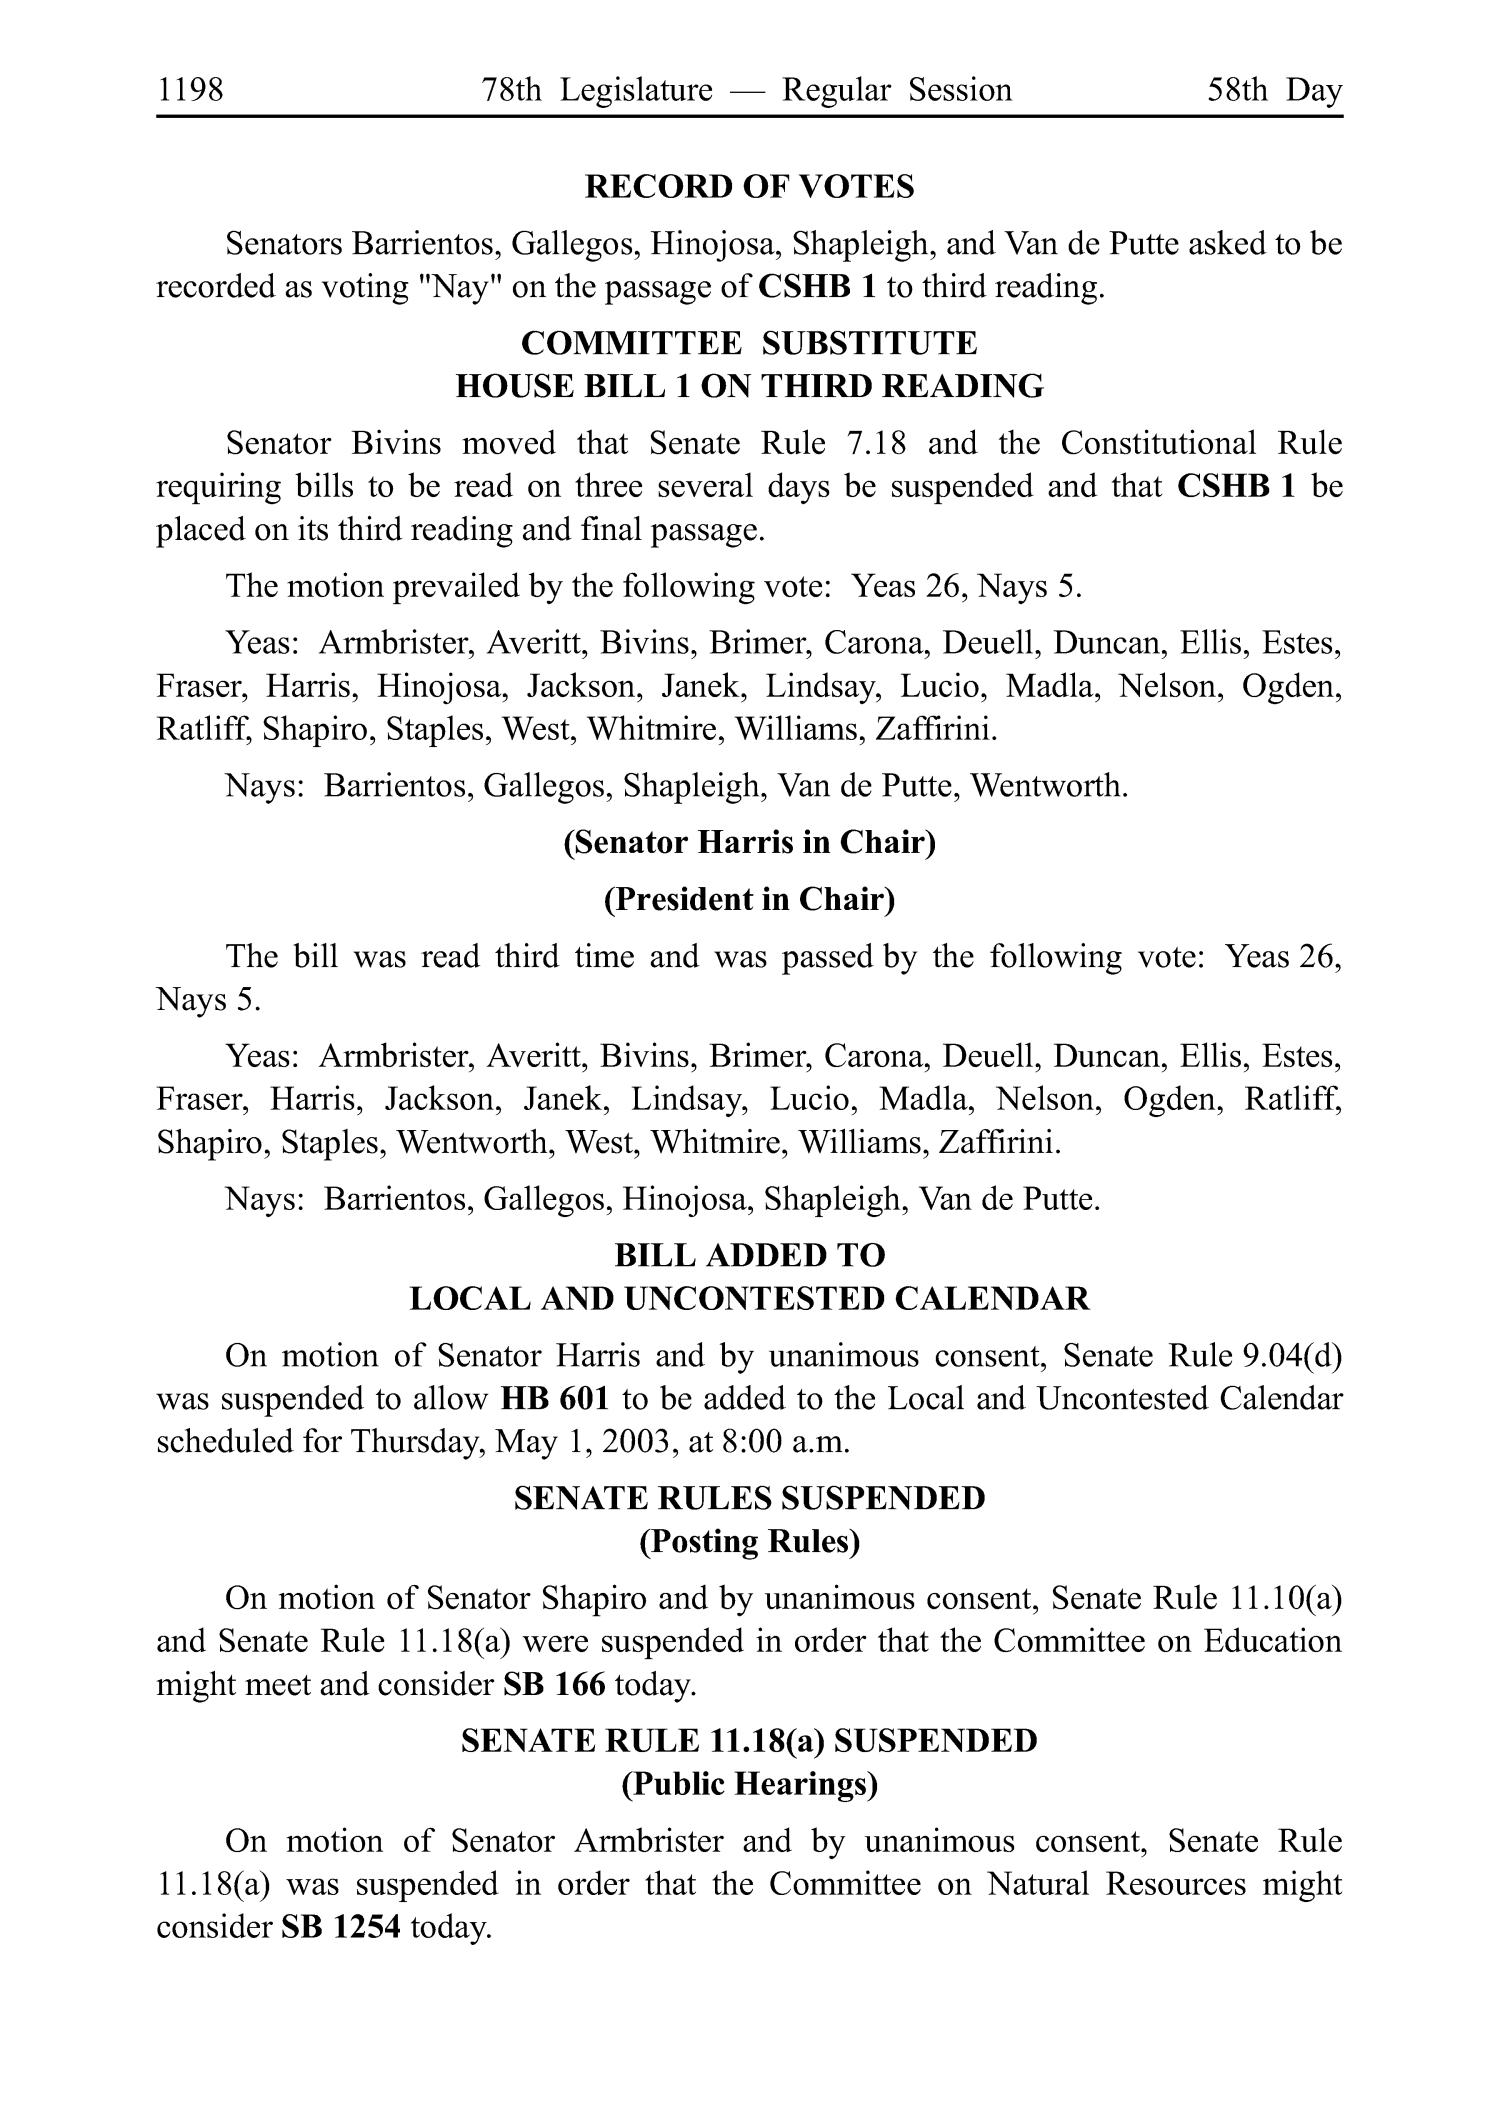 Journal of the Senate, Regular Session of the Seventy-Eighth Legislature of the State of Texas, Volume 1
                                                
                                                    1198
                                                